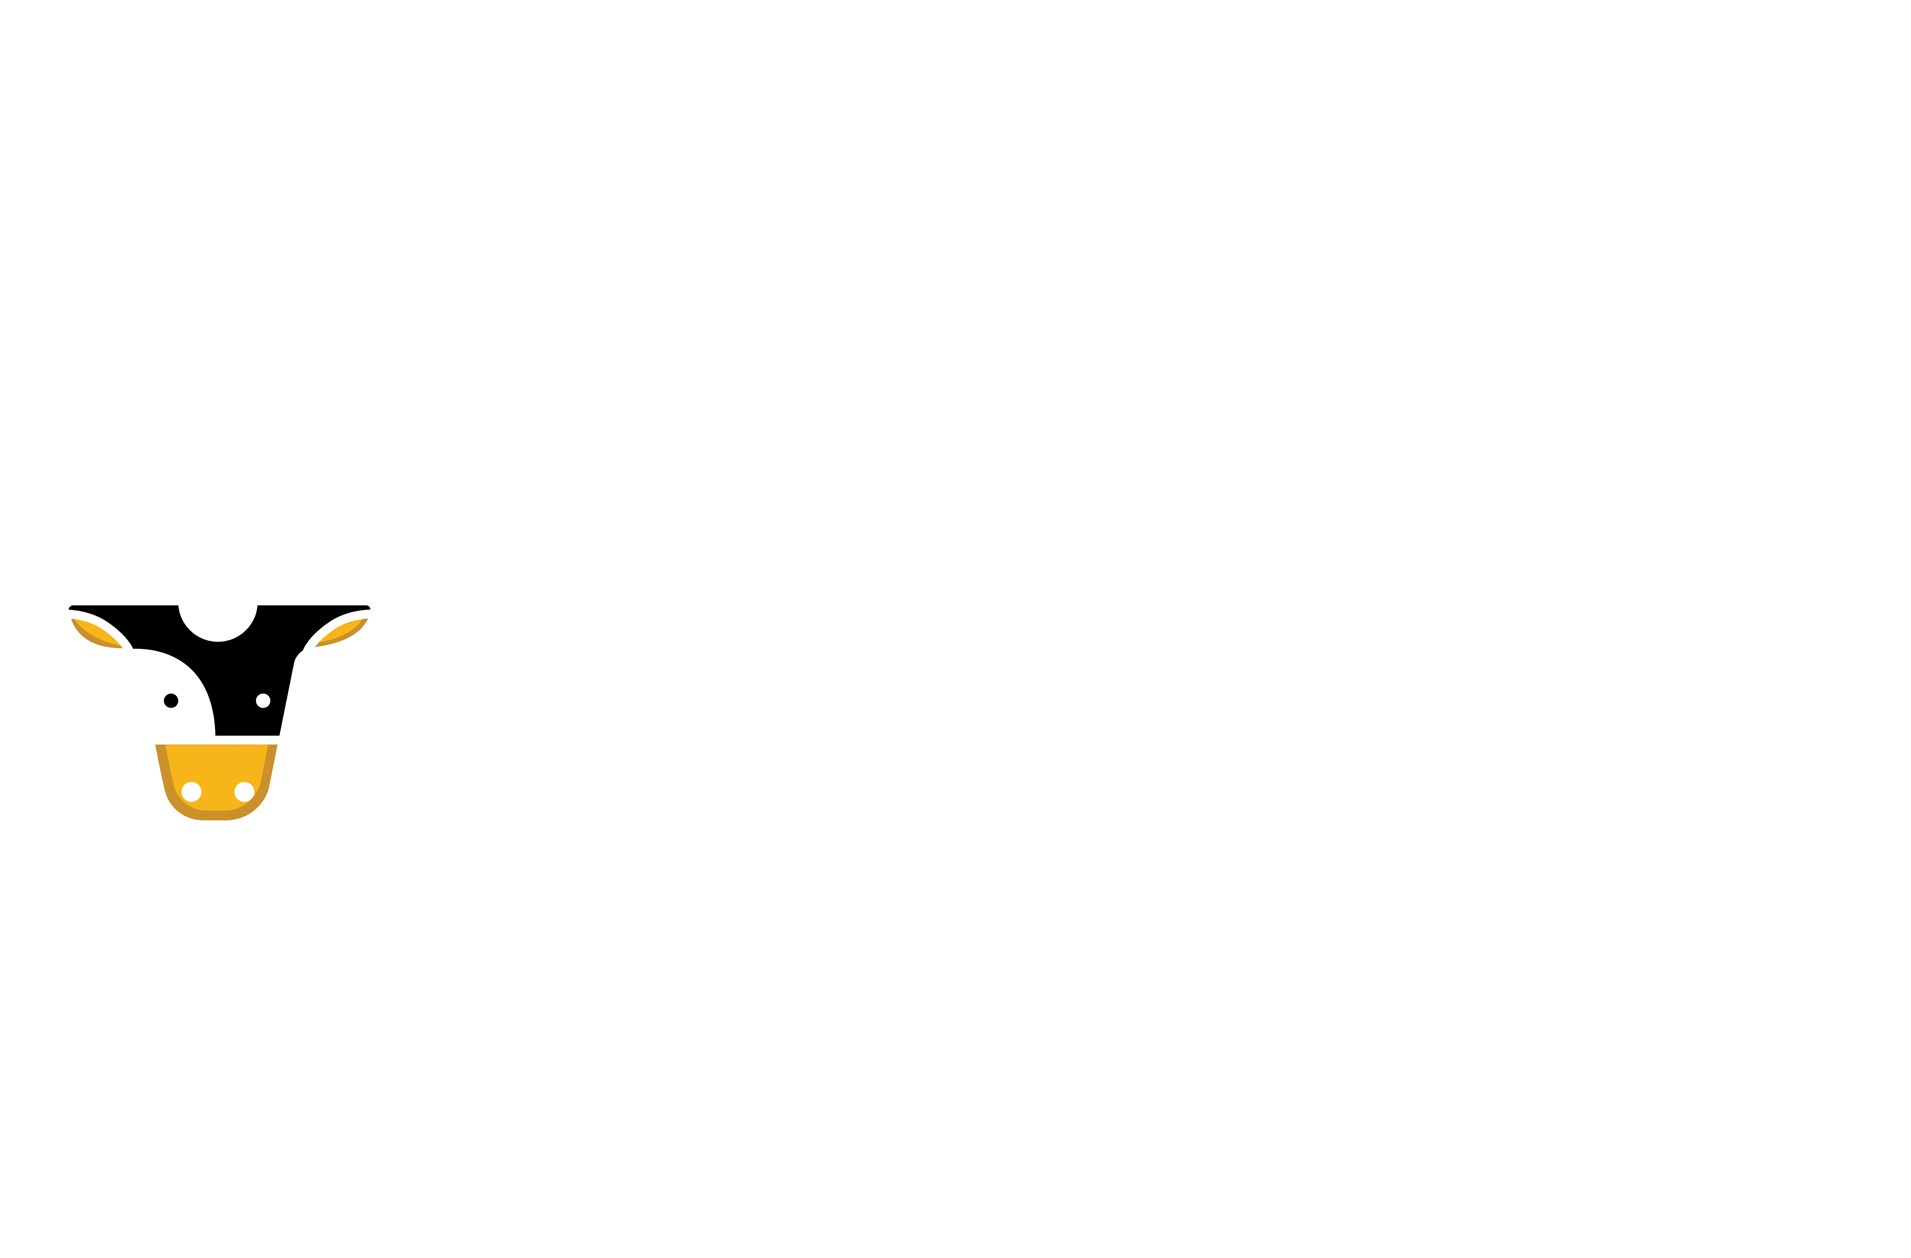 The Tipsy Cow Logo